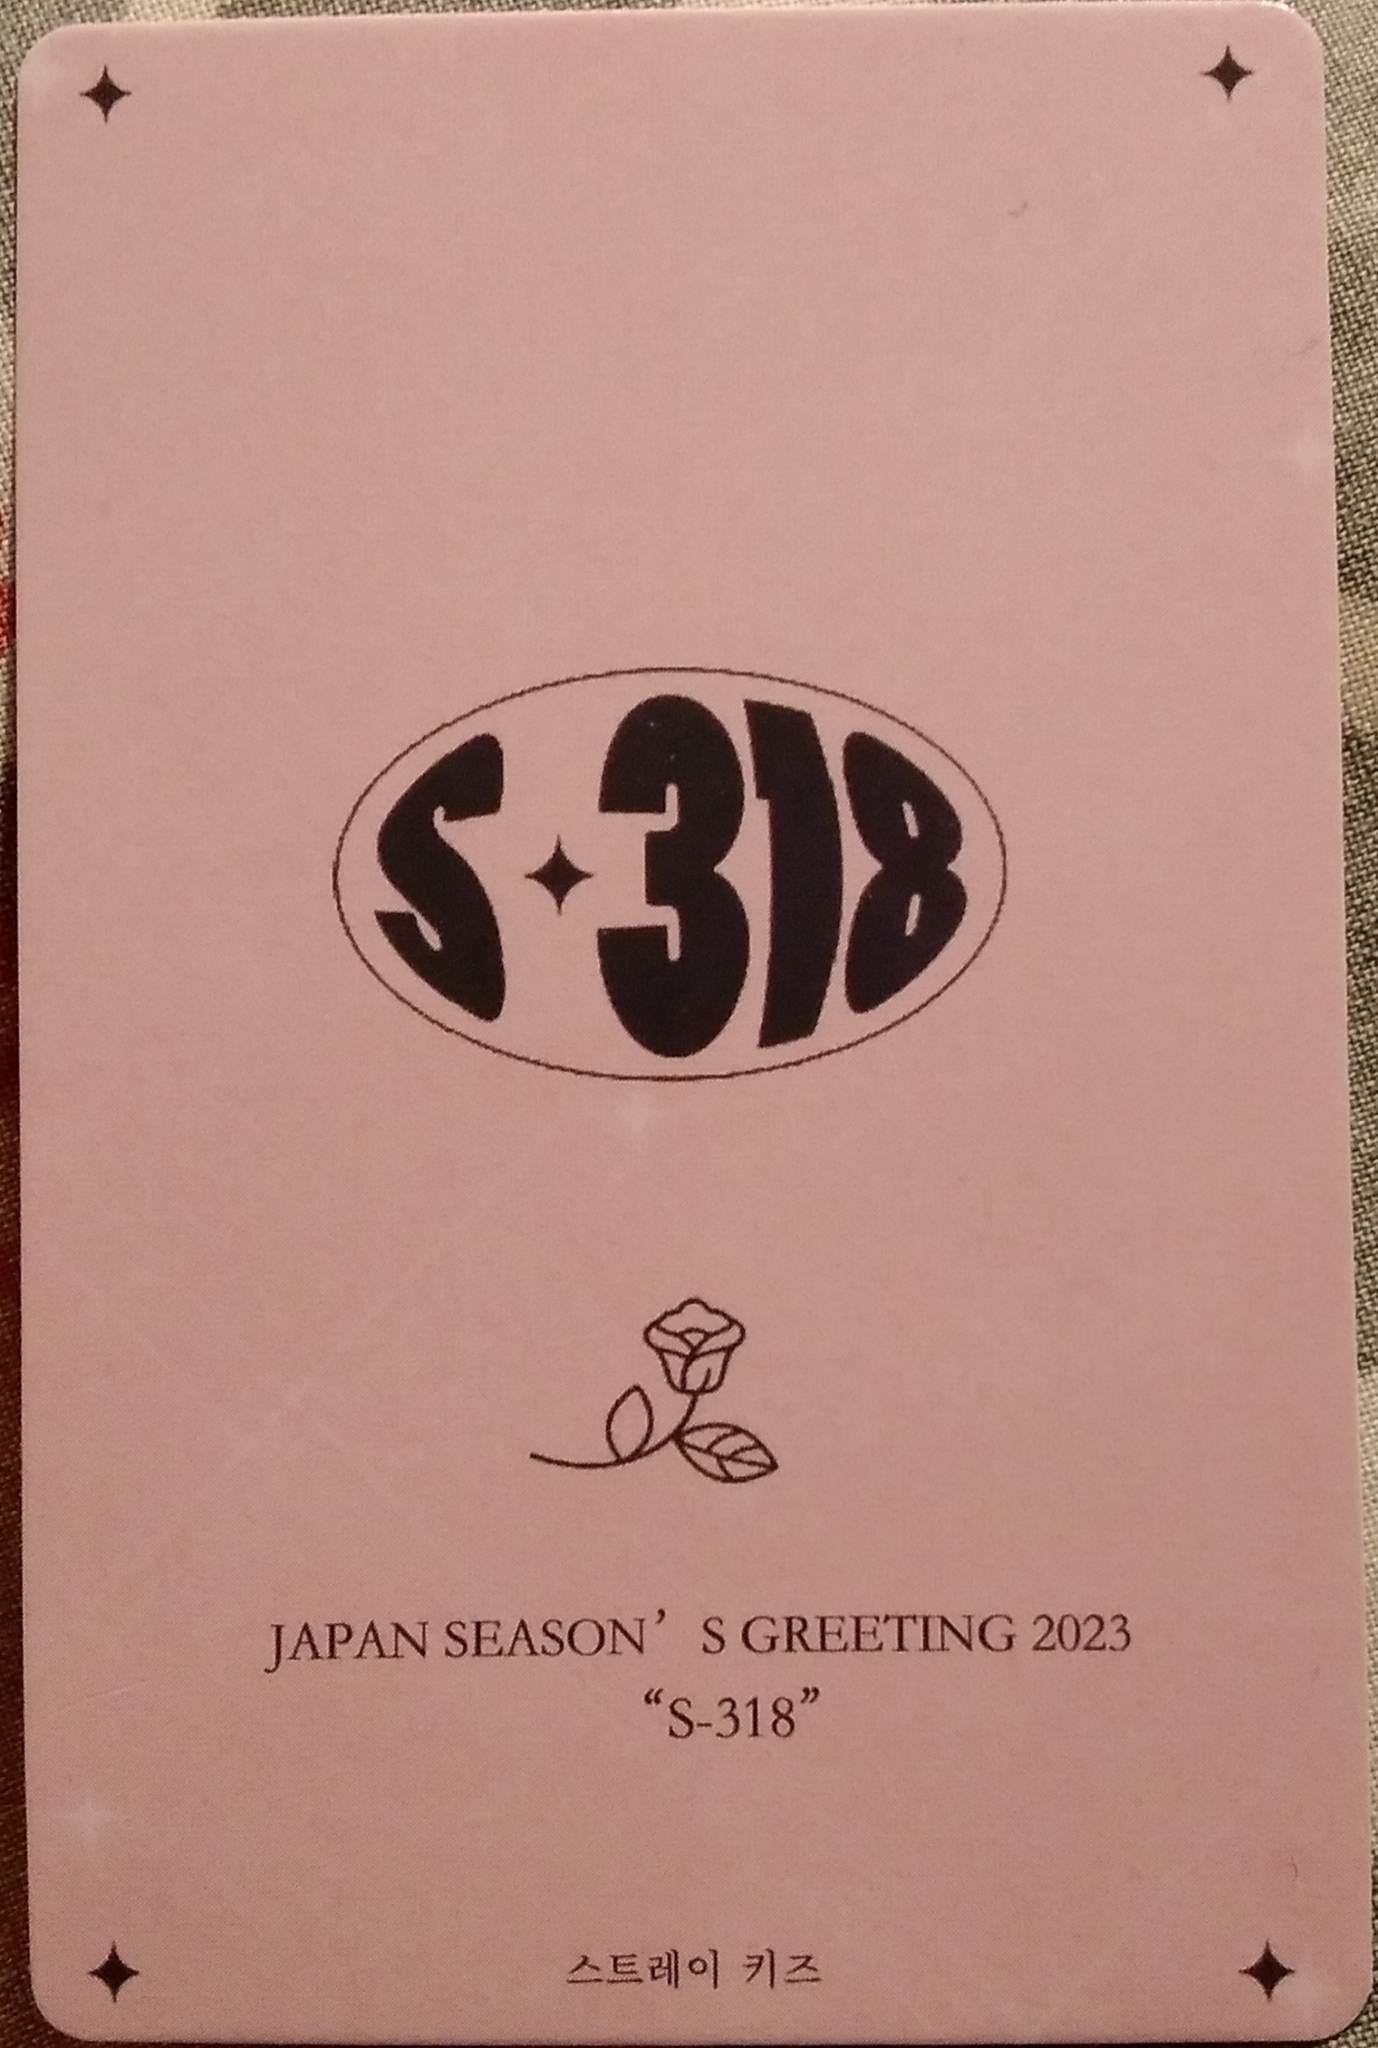 Photocard  STRAYKIDS  Japan season s greetings 2023  "S-318"  Bang chan